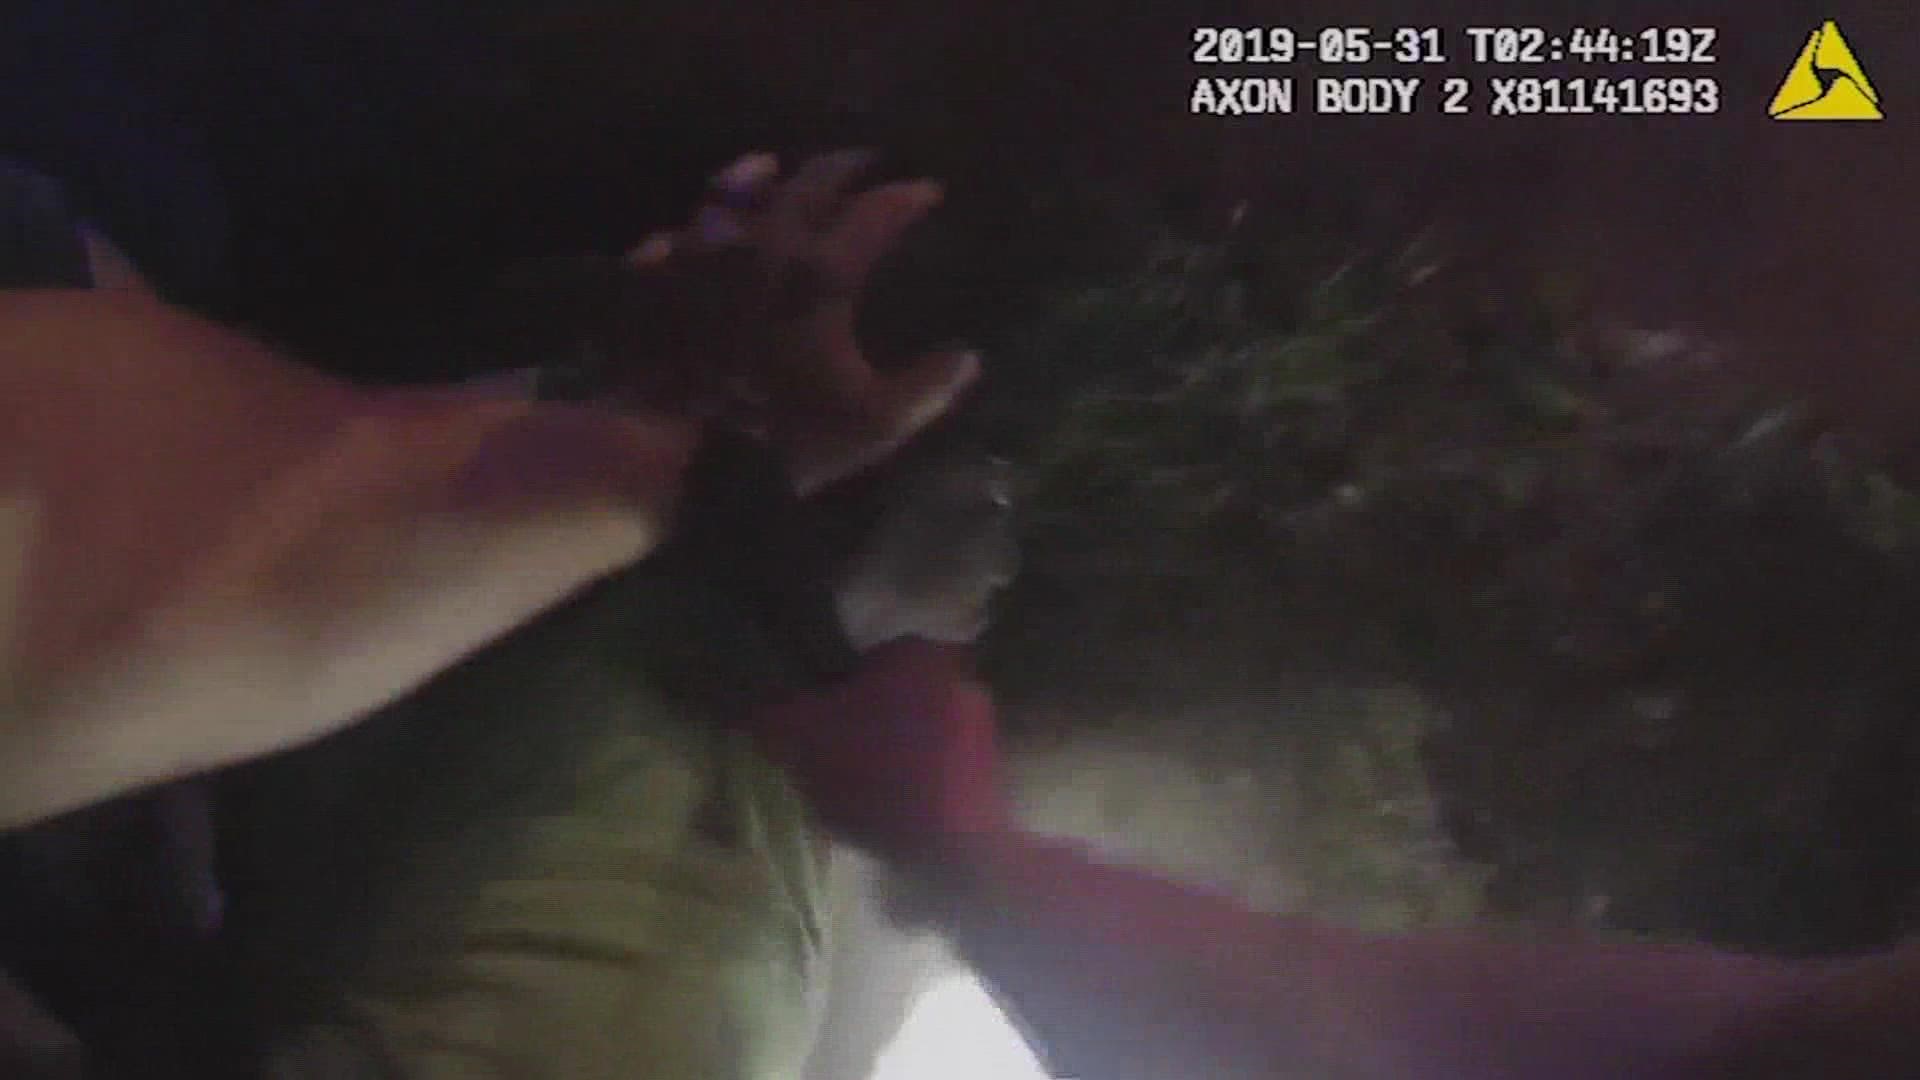 'Pain compliance': Video shows LSP trooper pummeling Black man